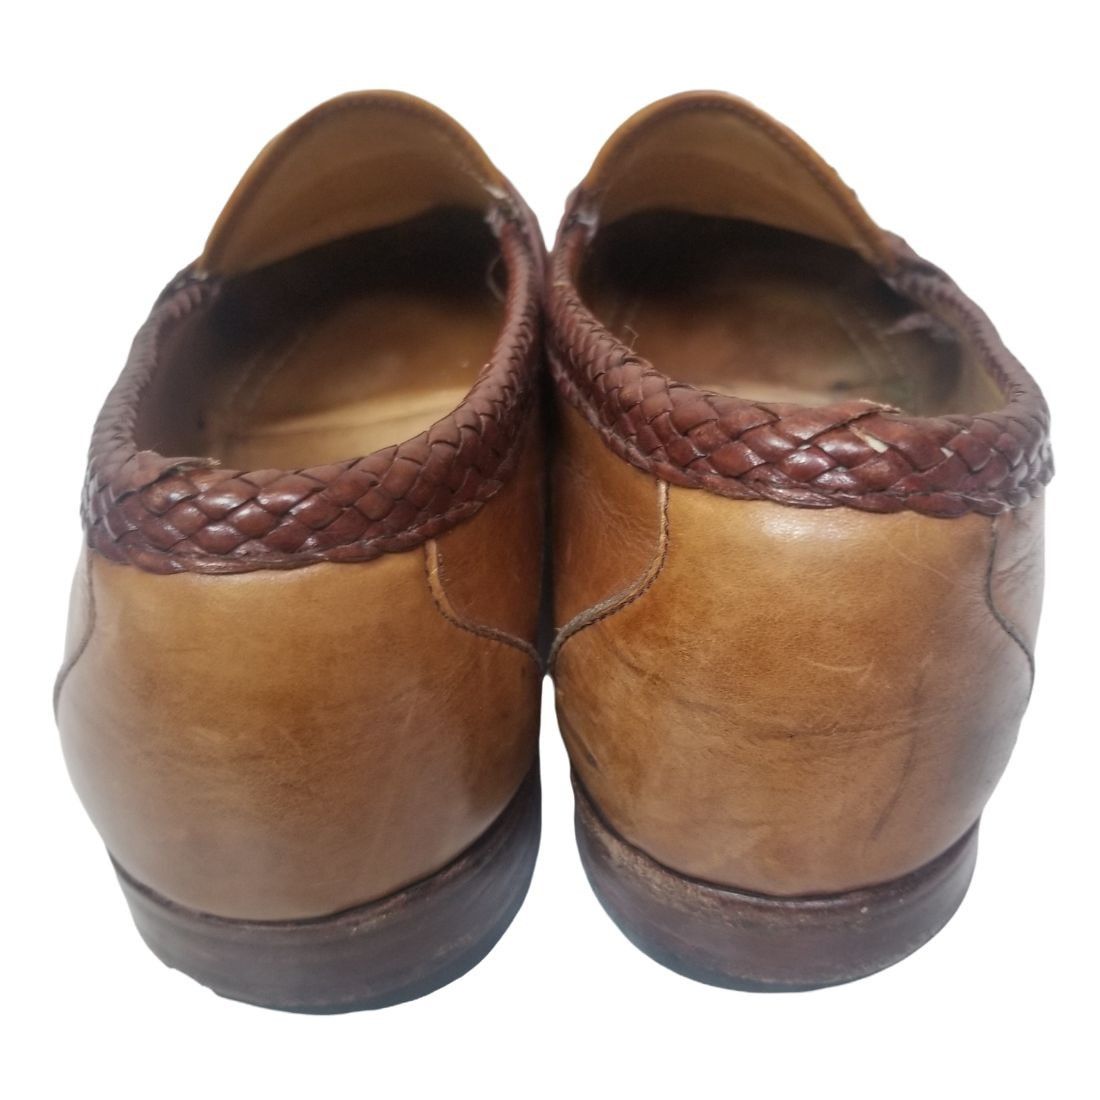 Allen Edmonds Allen Edmonds Leather Closed Toe Slip On Maxfield Loafers Size US 12 / EU 45 - 6 Thumbnail